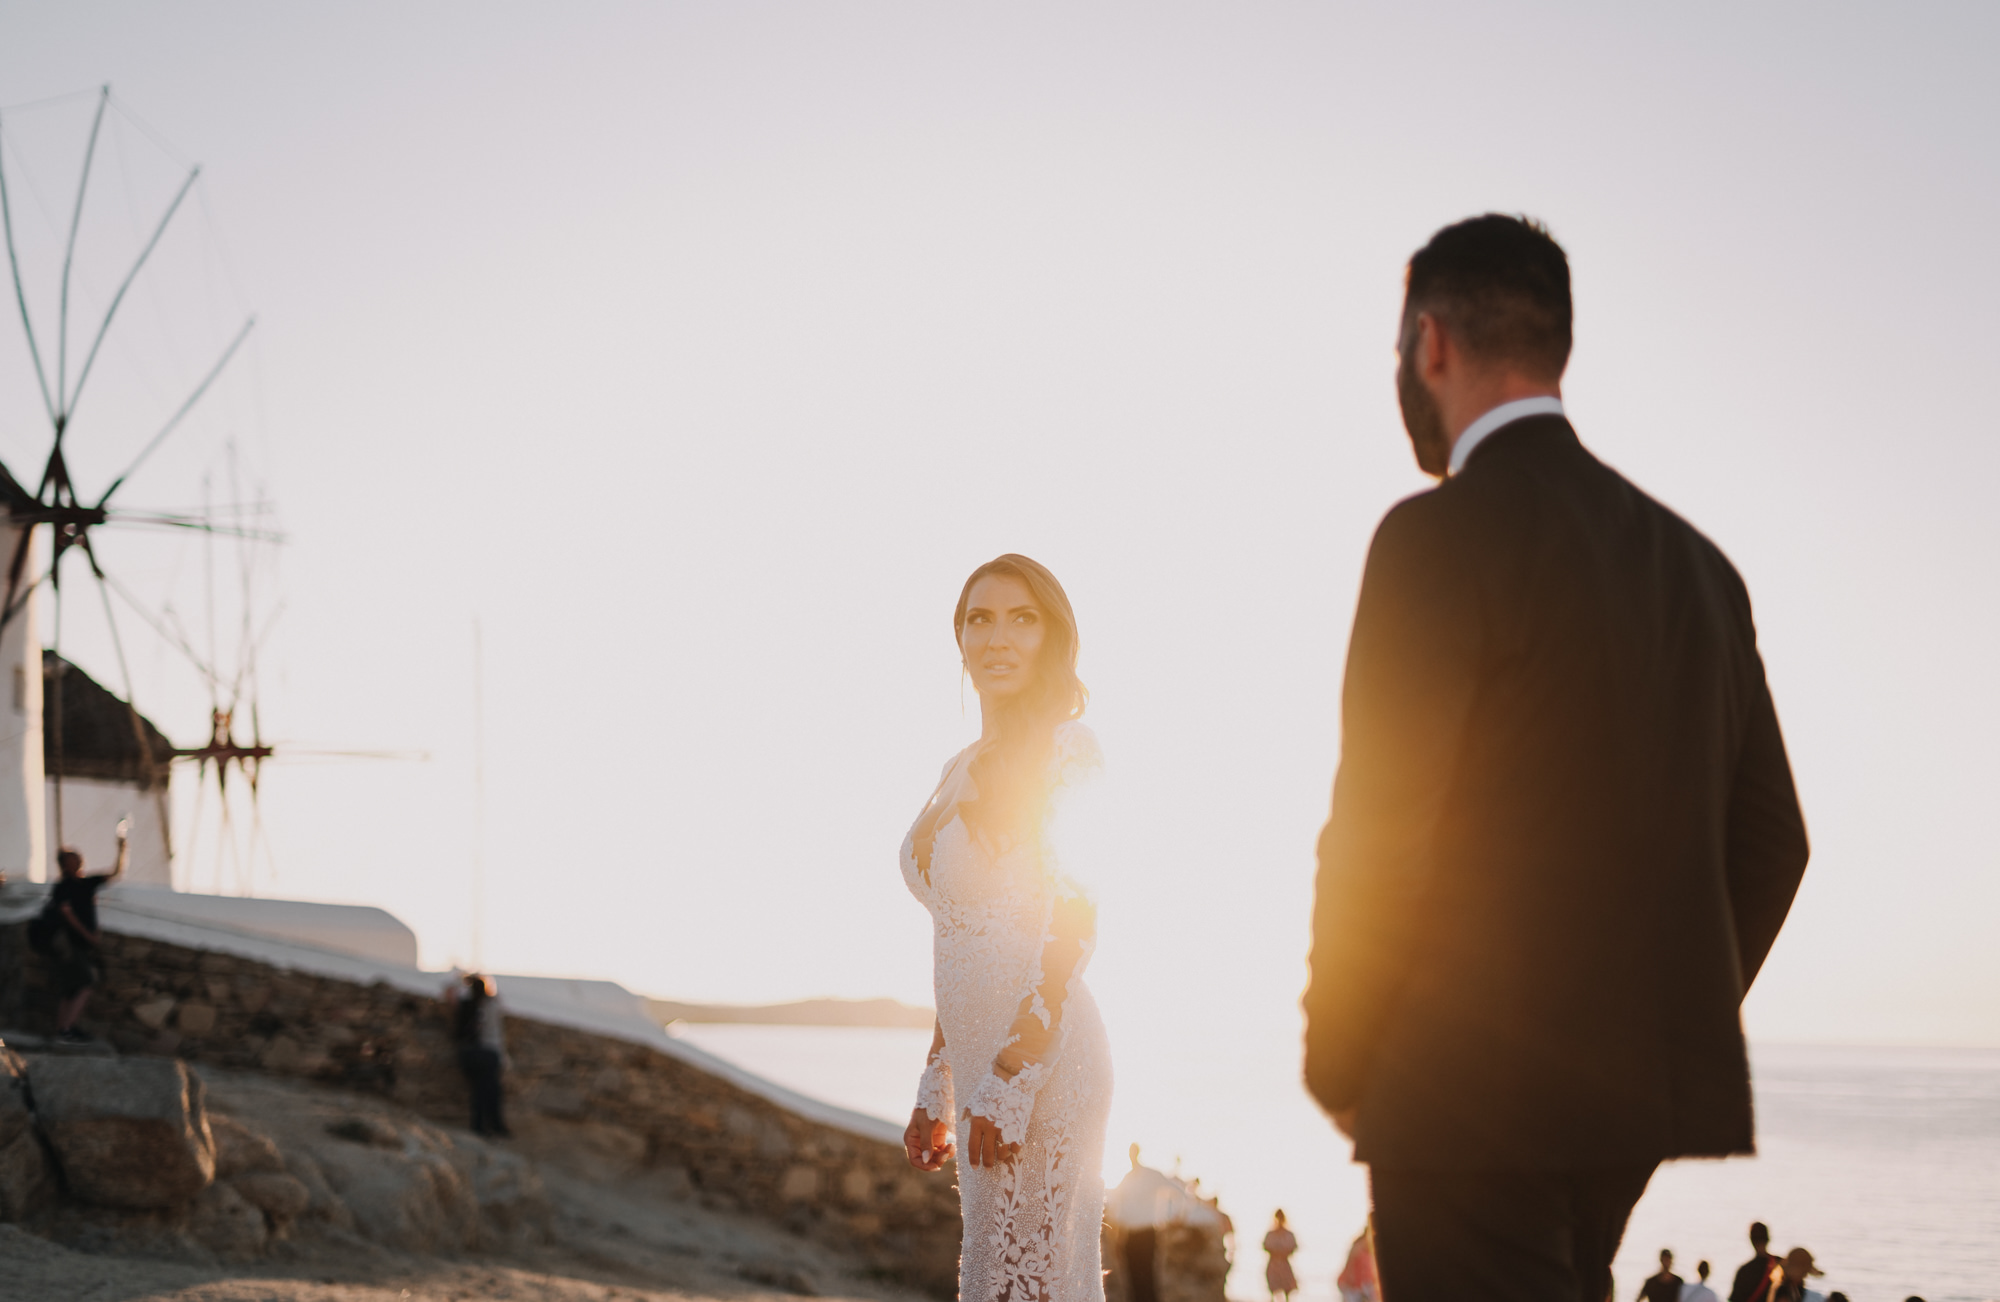 Professional wedding photography in Mykonos, Greece by Albatross